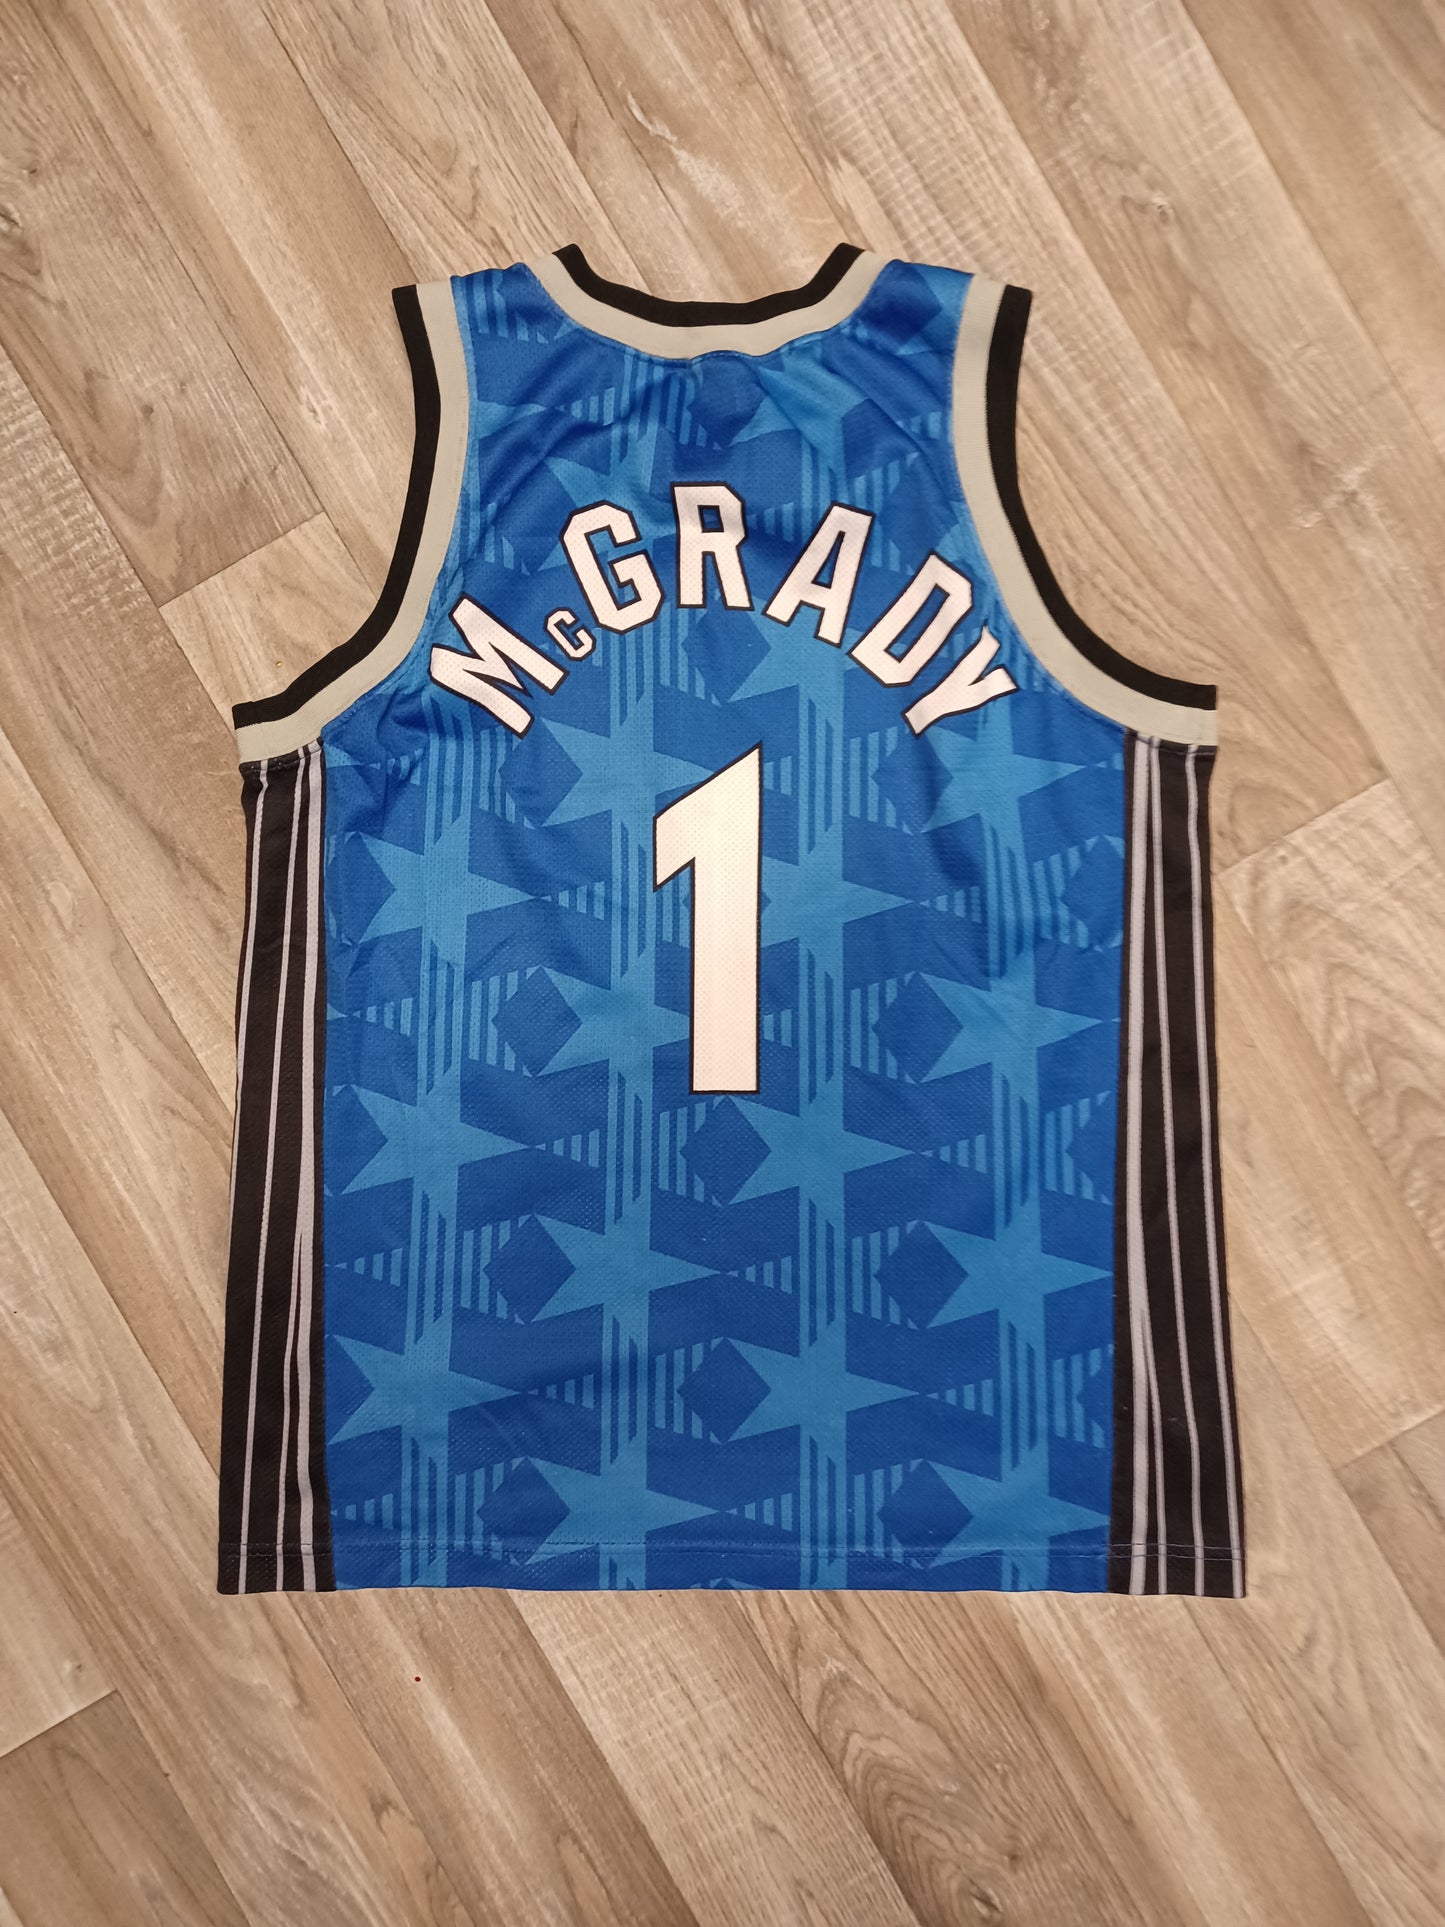 Tracy McGrady Orlando Magic Jersey  Size Small